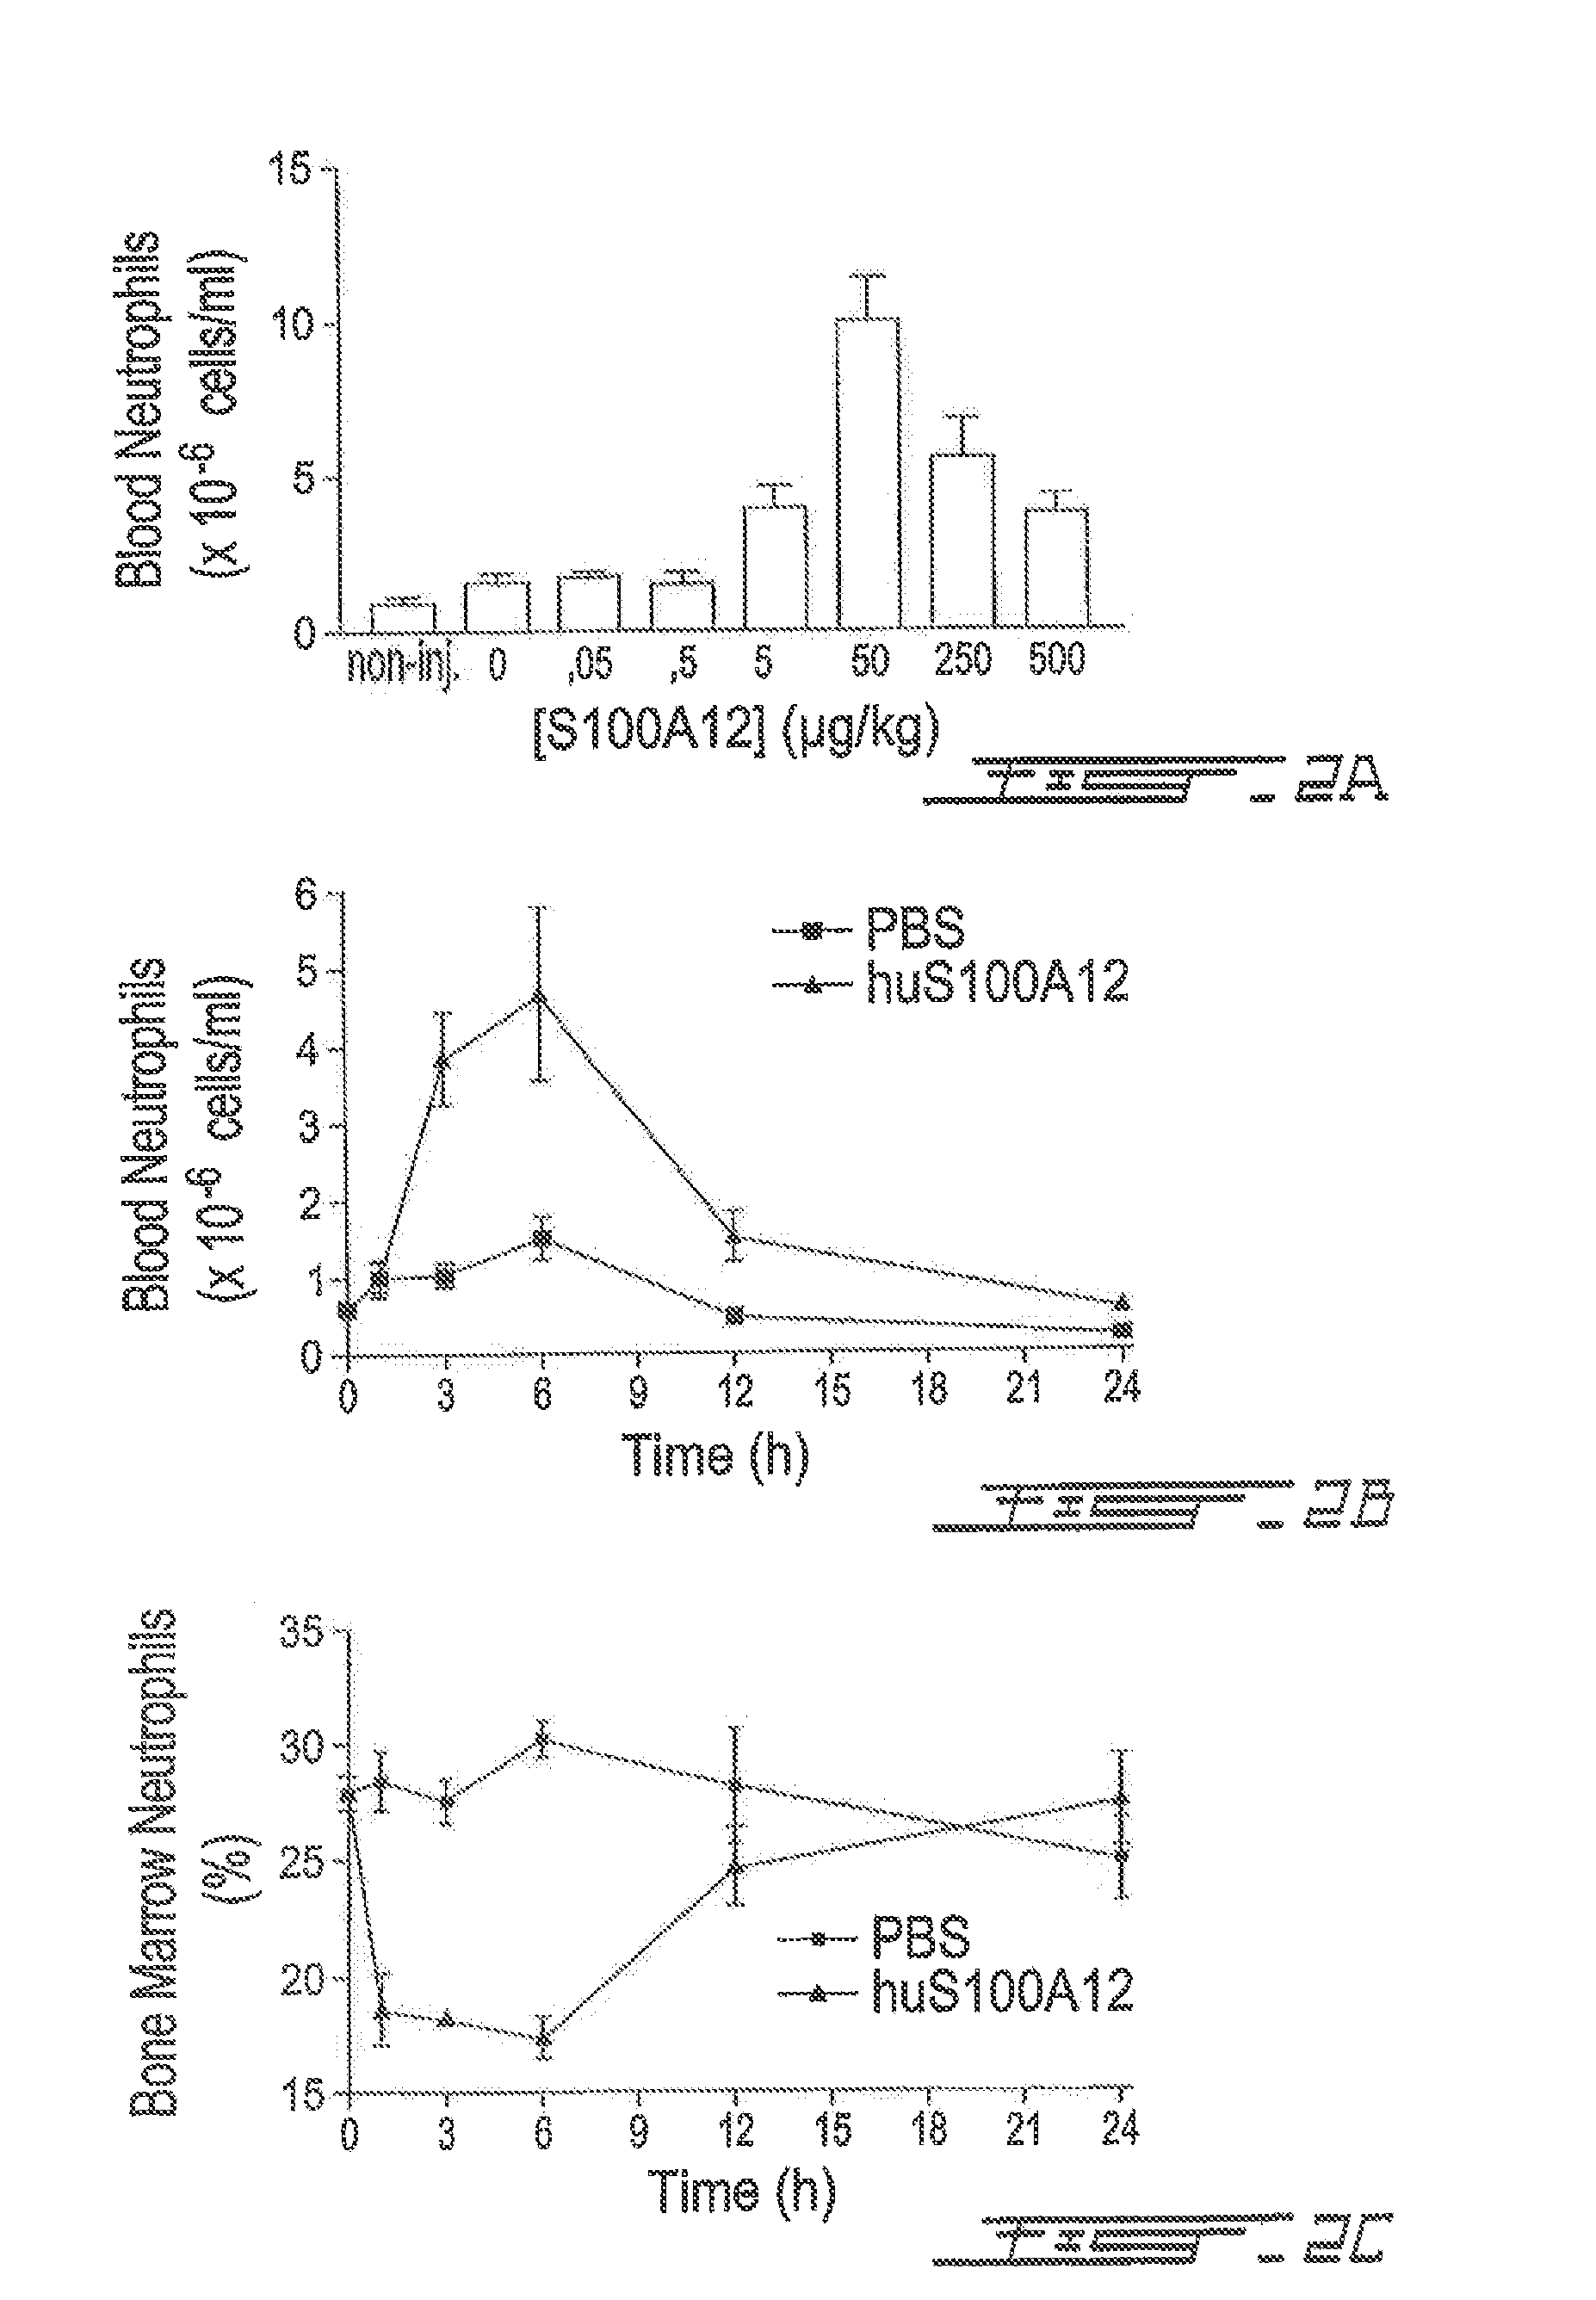 S100 protein inhibitors for treating leukemia